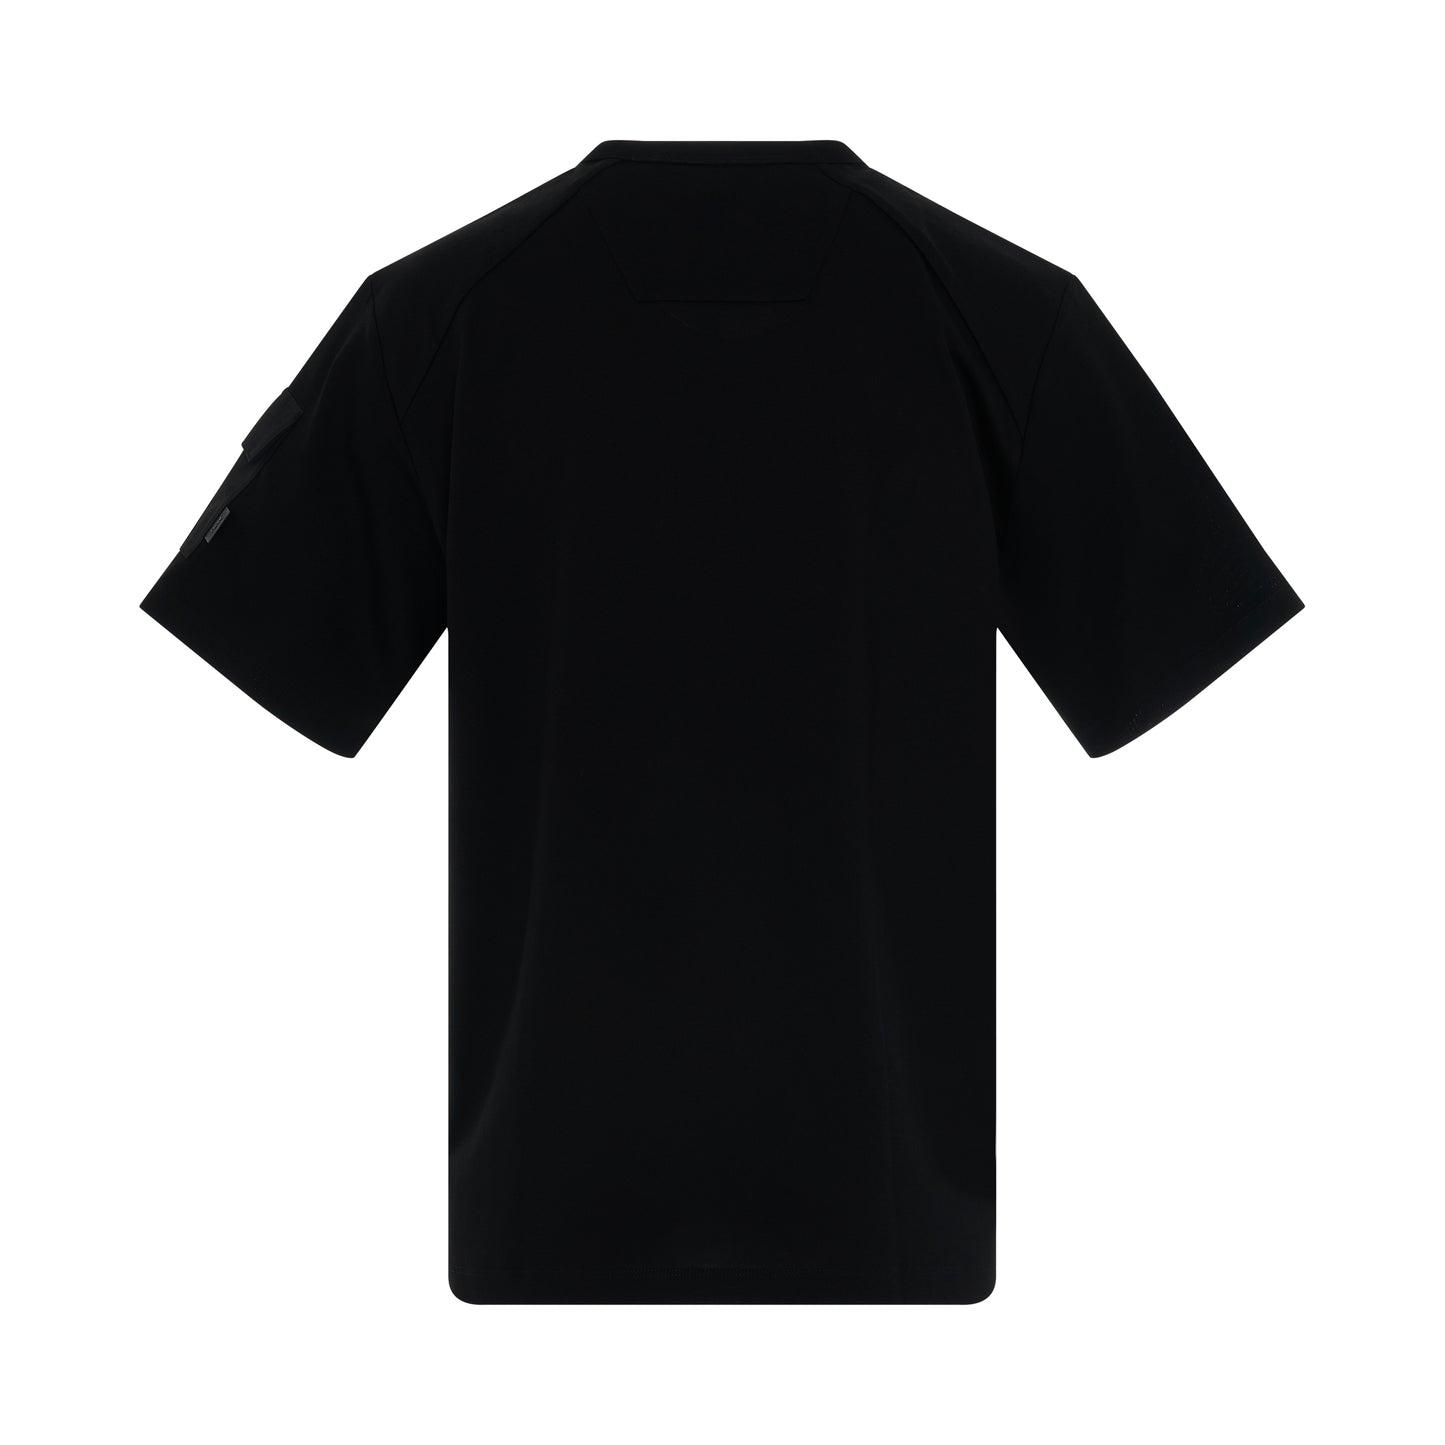 Loose Fit Pocket Sleeve T-Shirt in Black